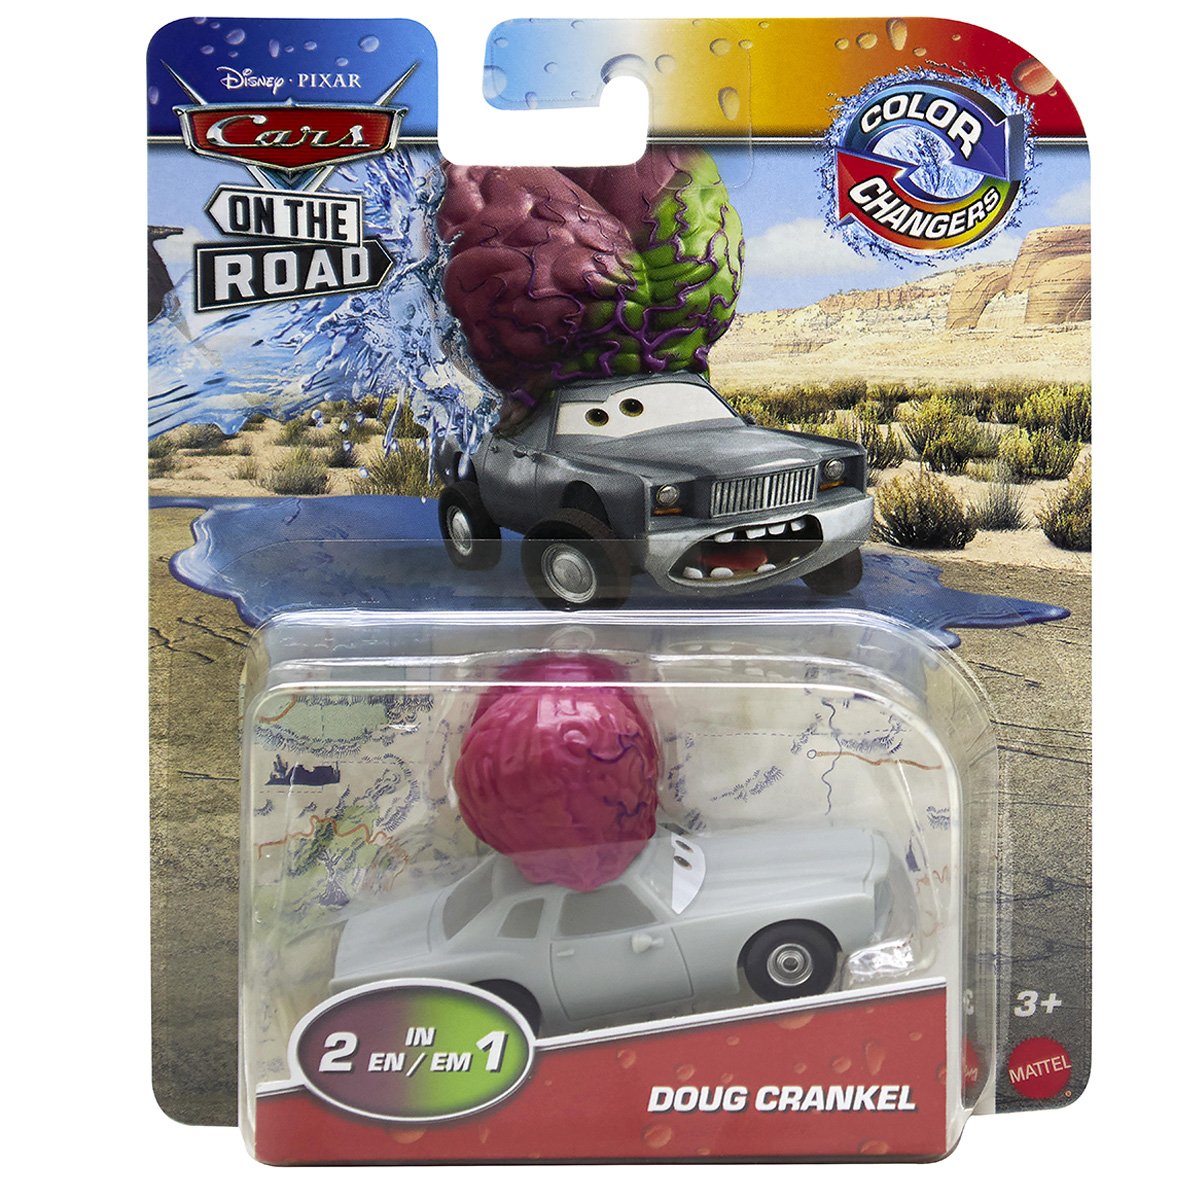 Masinuta Disney Cars, Color Changers, Doug Crankel, 1:55, HMD72